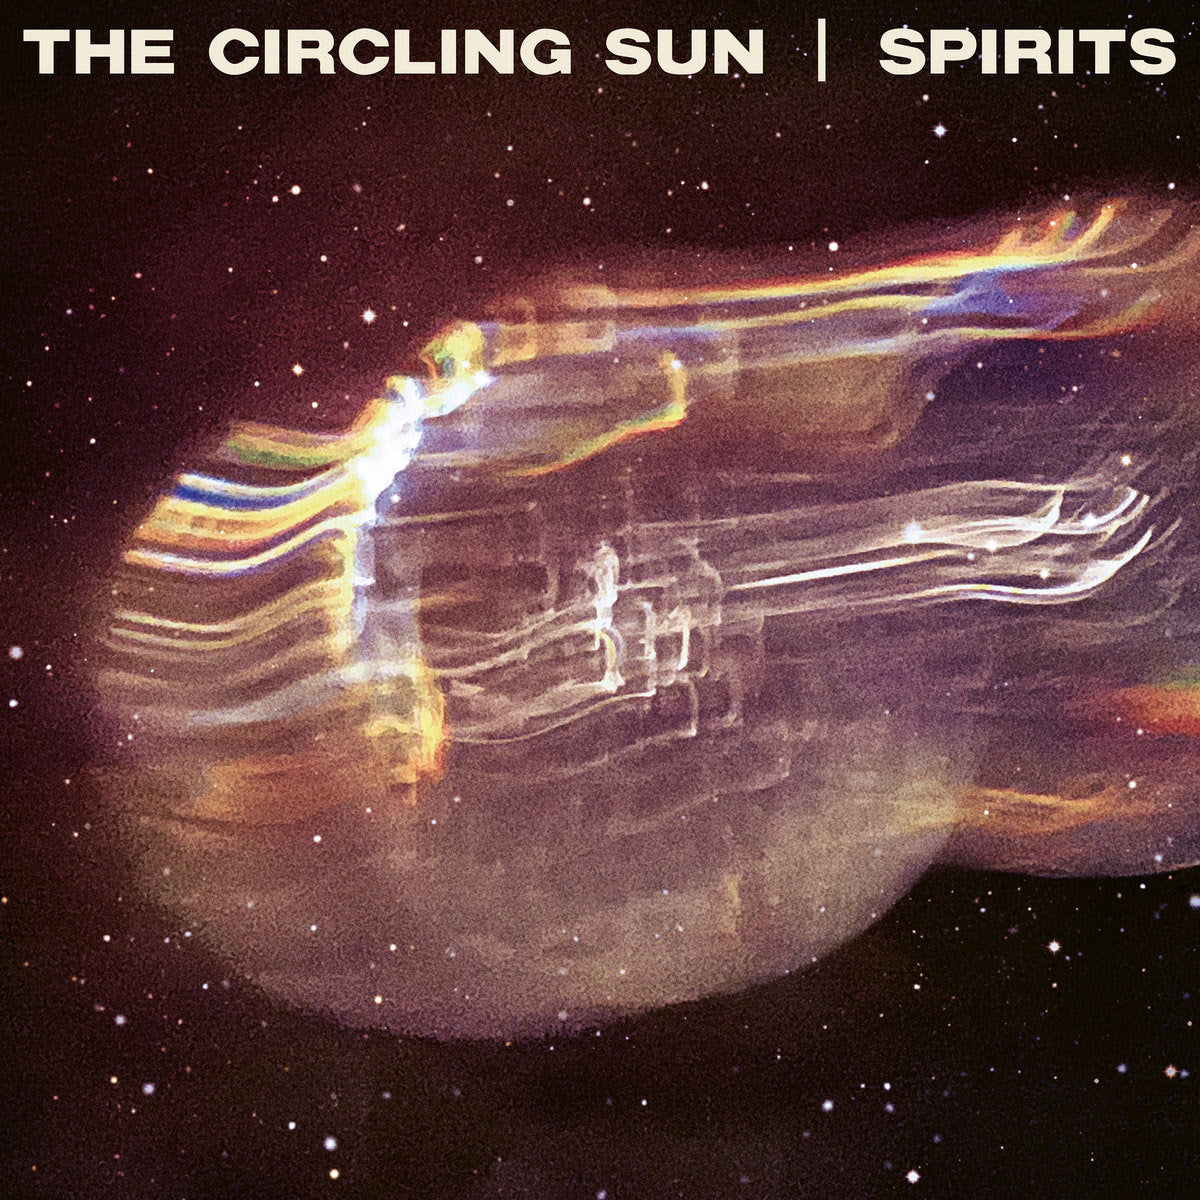 The Circling Sun - Spirits | Buy the Vinyl LP from Flying Nun Records